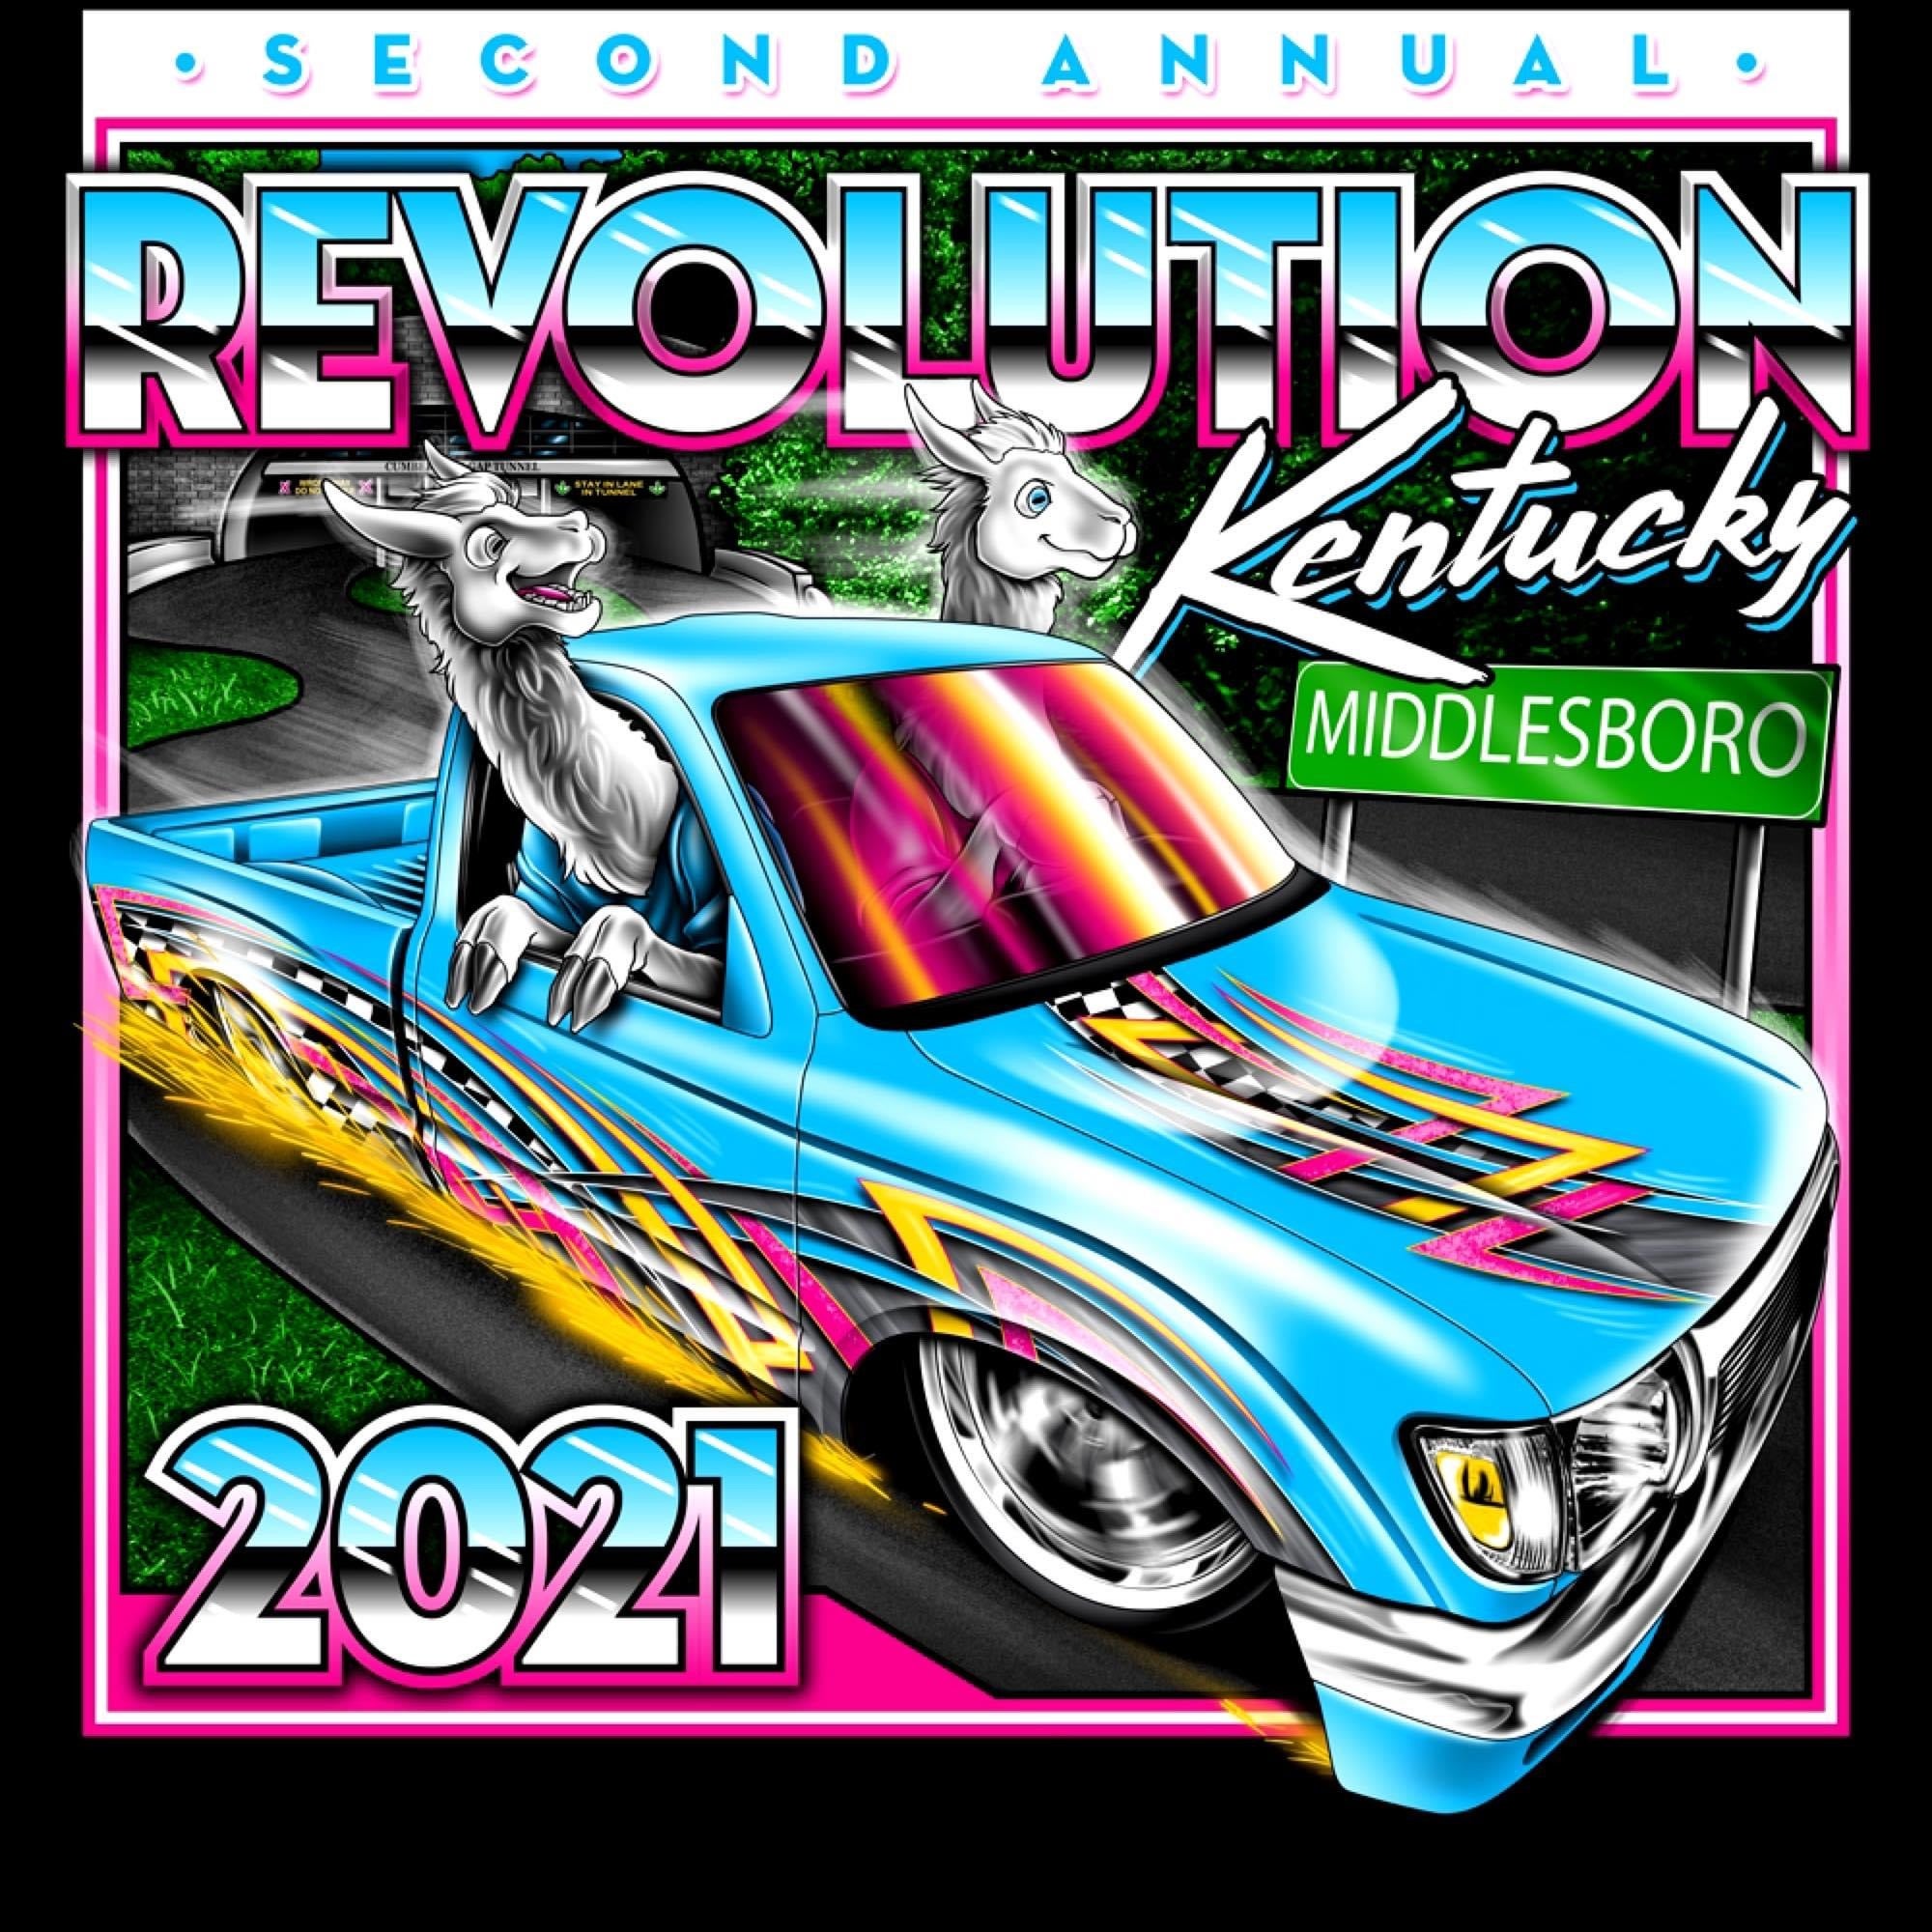 Revolution Kentucky car show hits downtown Middlesboro News Middlesboro News